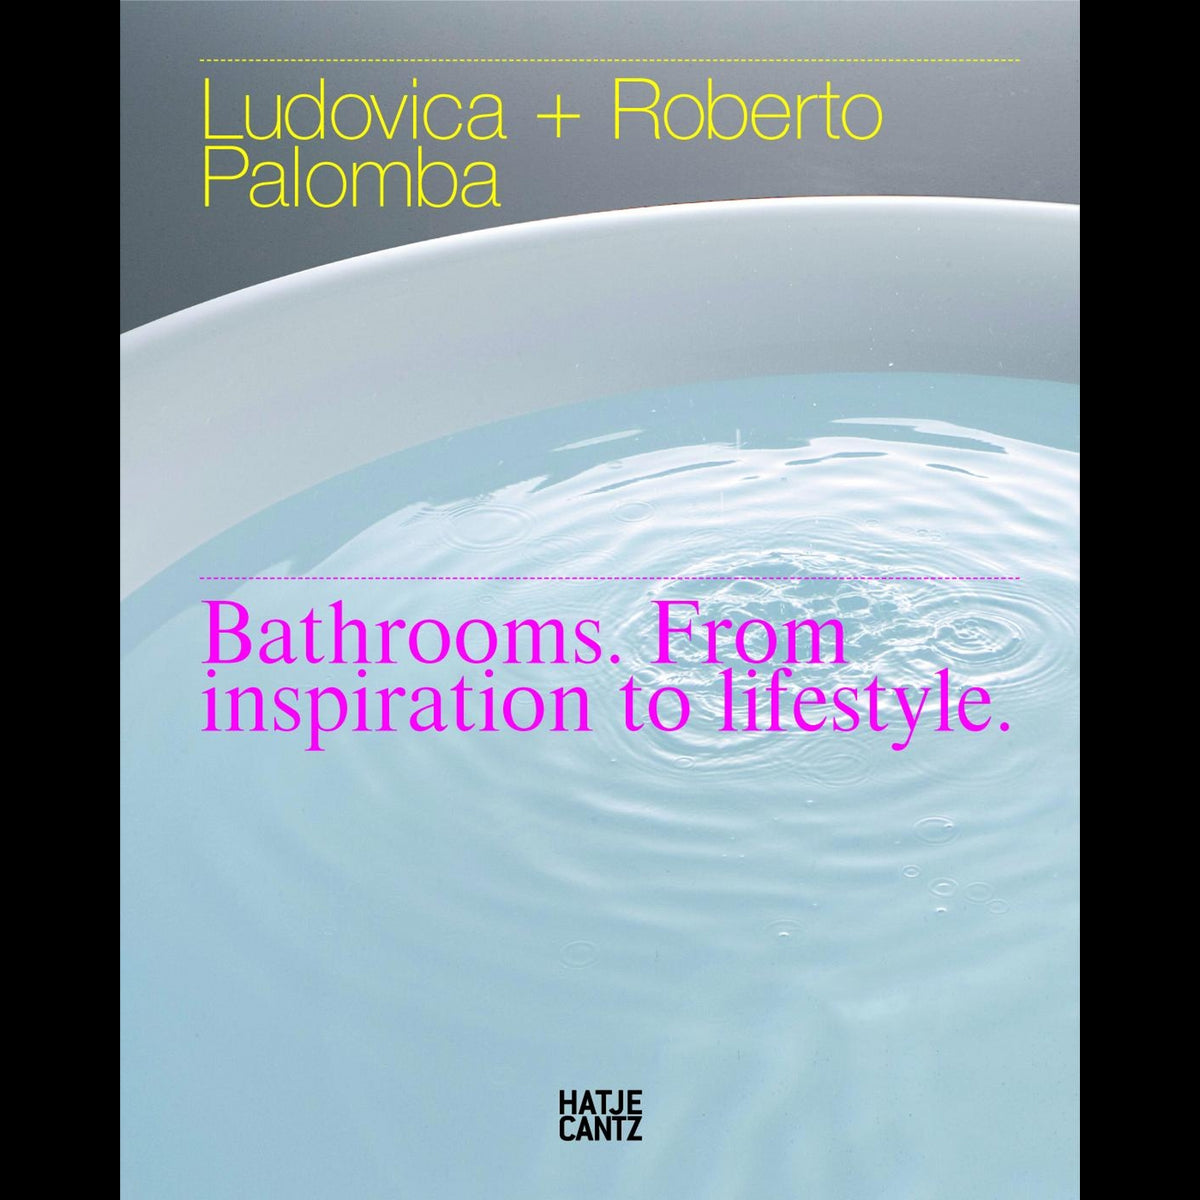 Coverbild Ludovica + Roberto Palomba